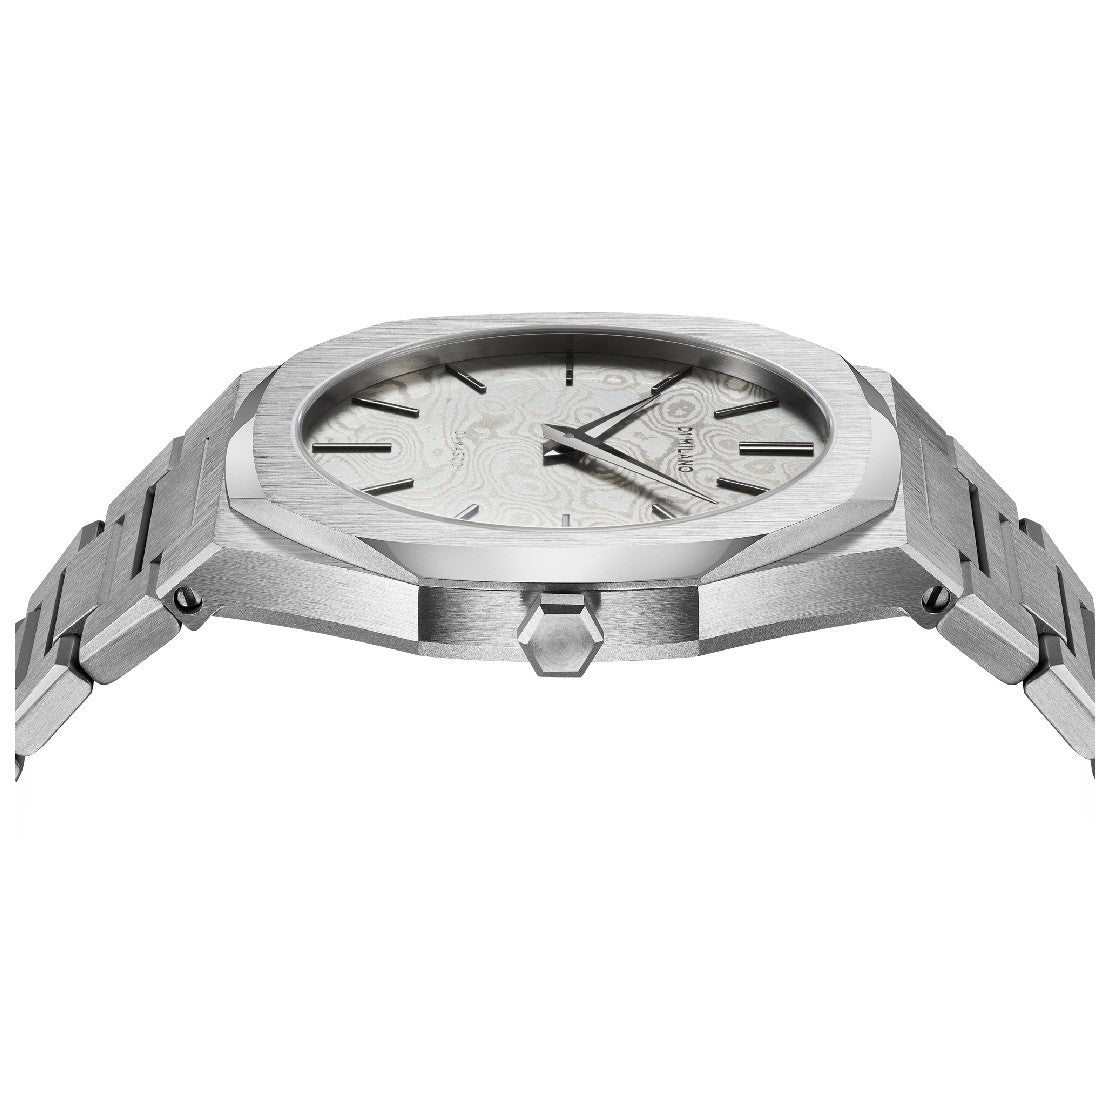 D1 Milano Men's Quartz Watch, Silver Dial - ML-0232